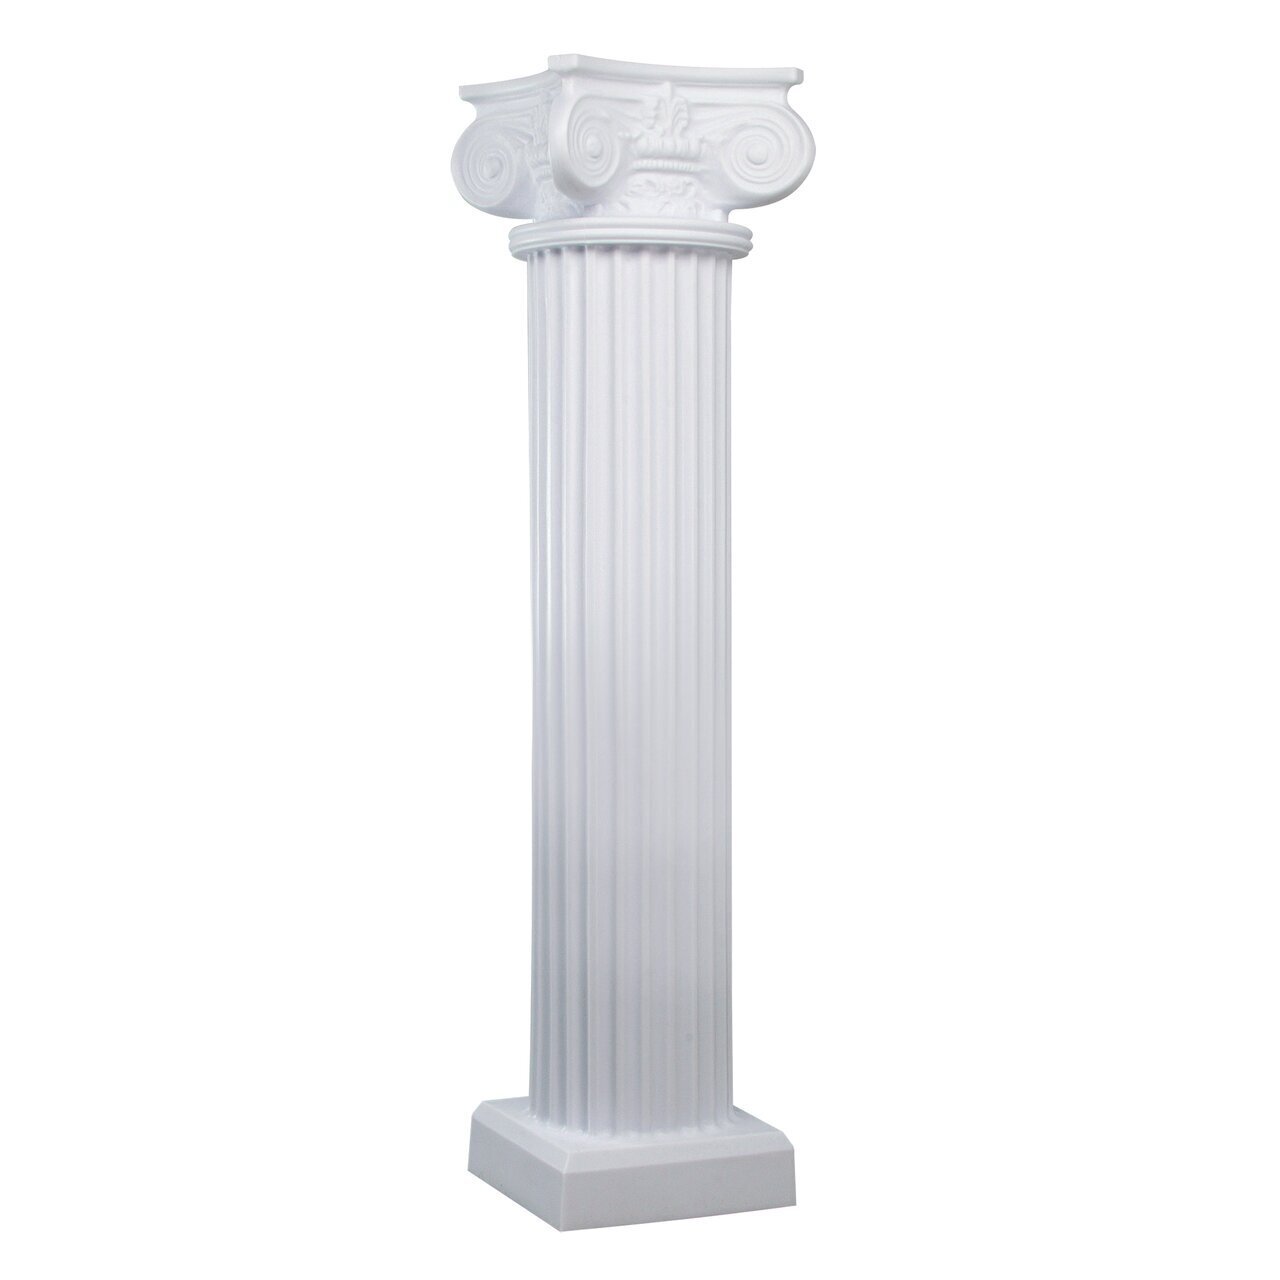 Greek column pedestal